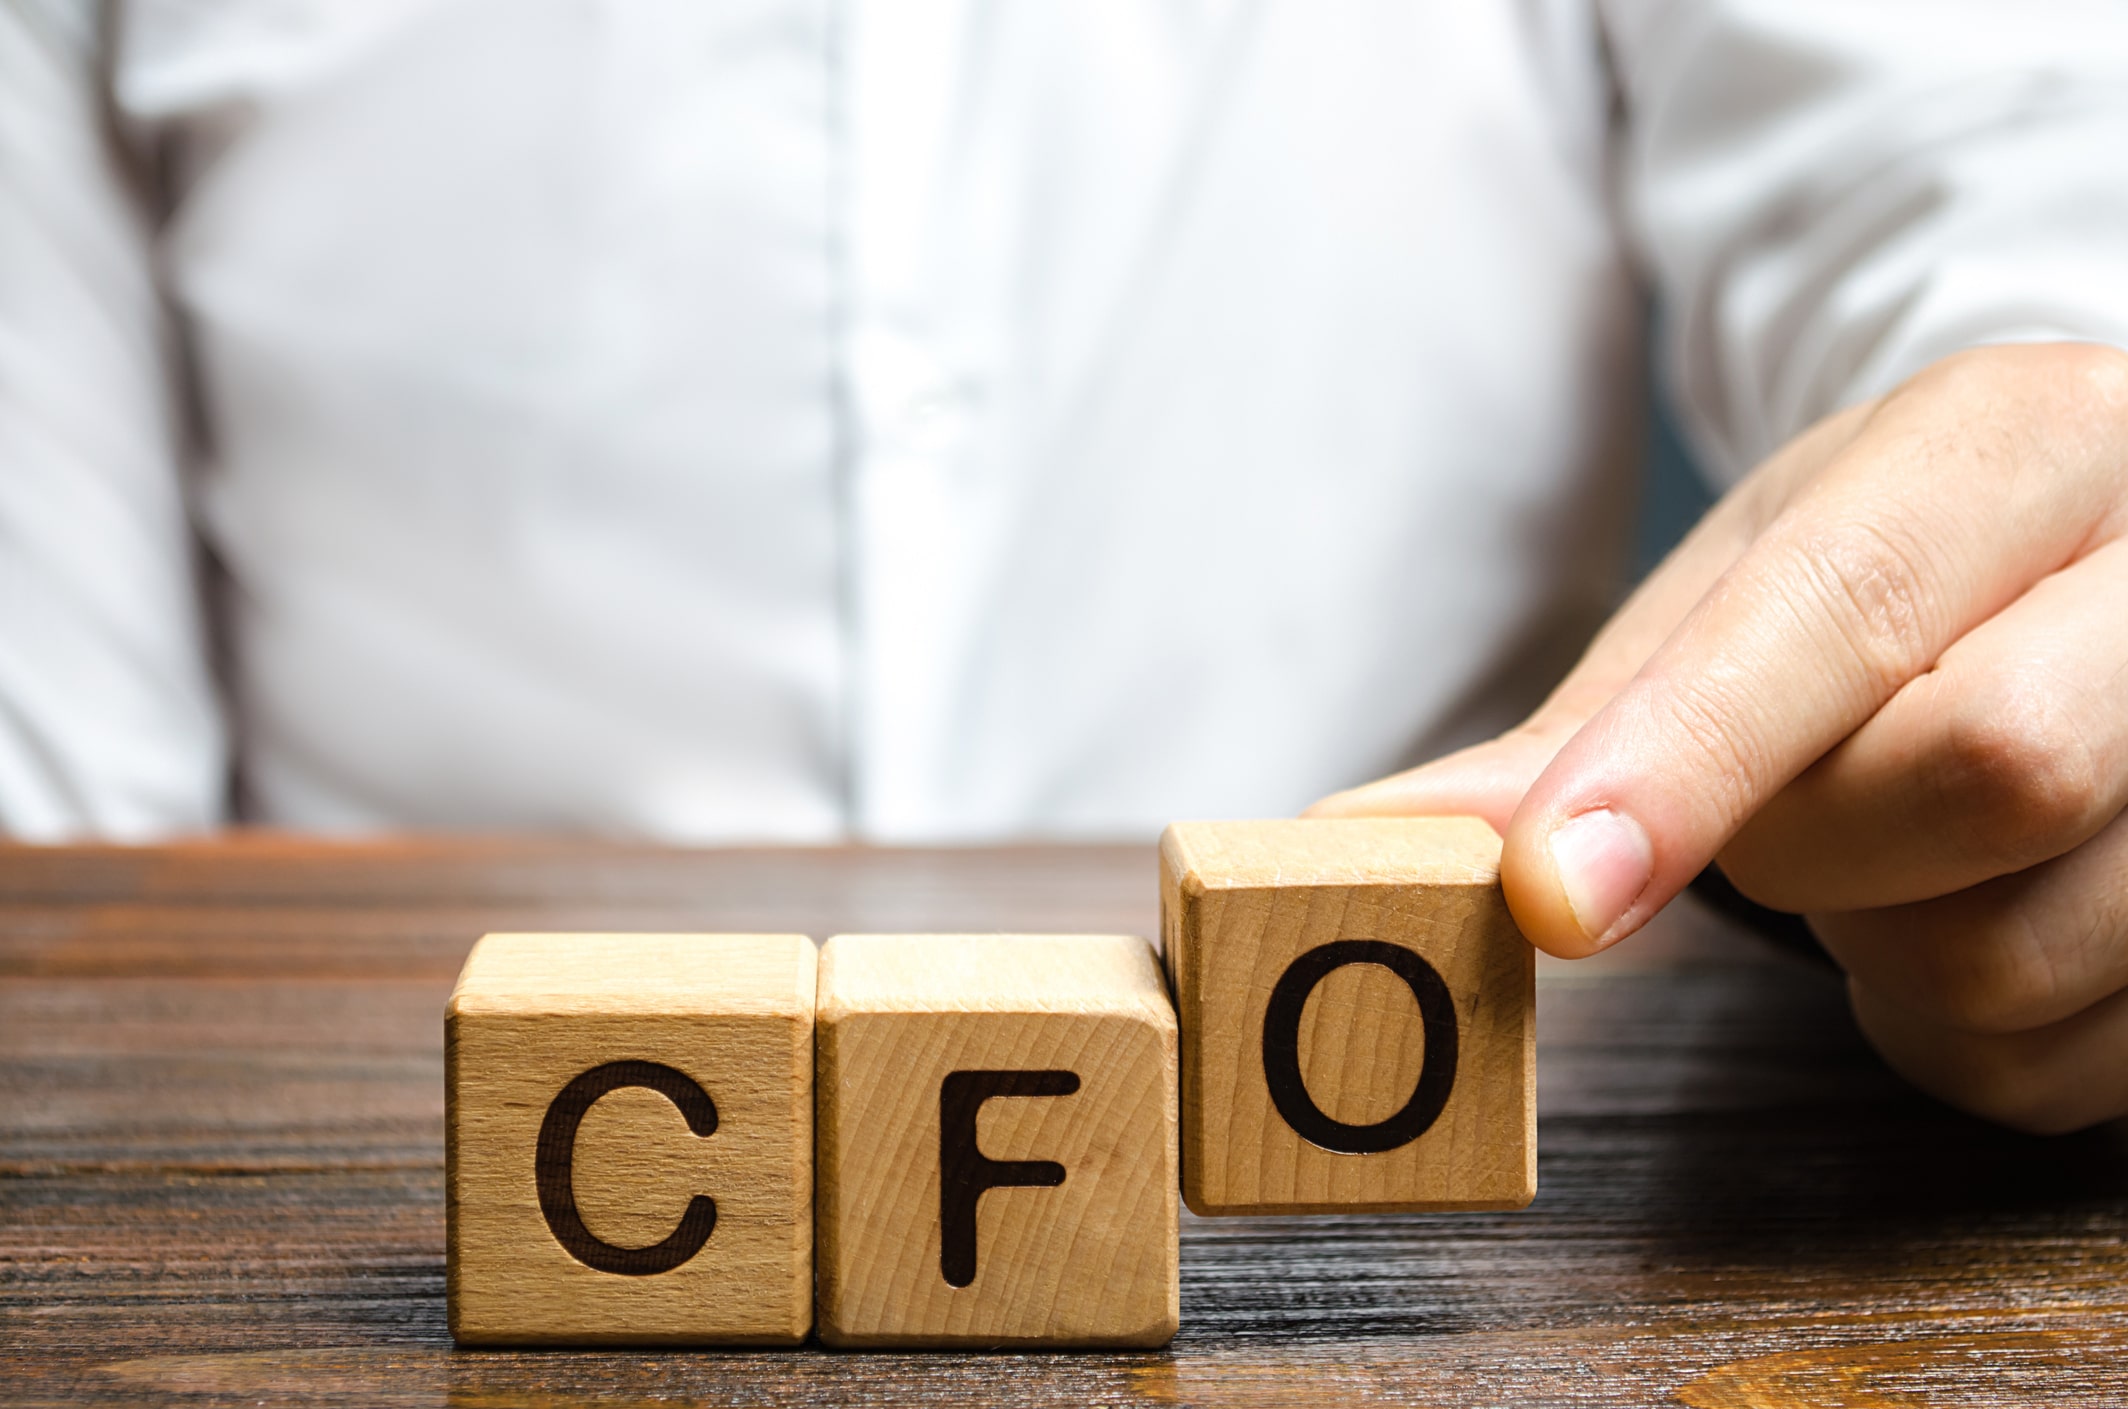 The strategic role of the CFO